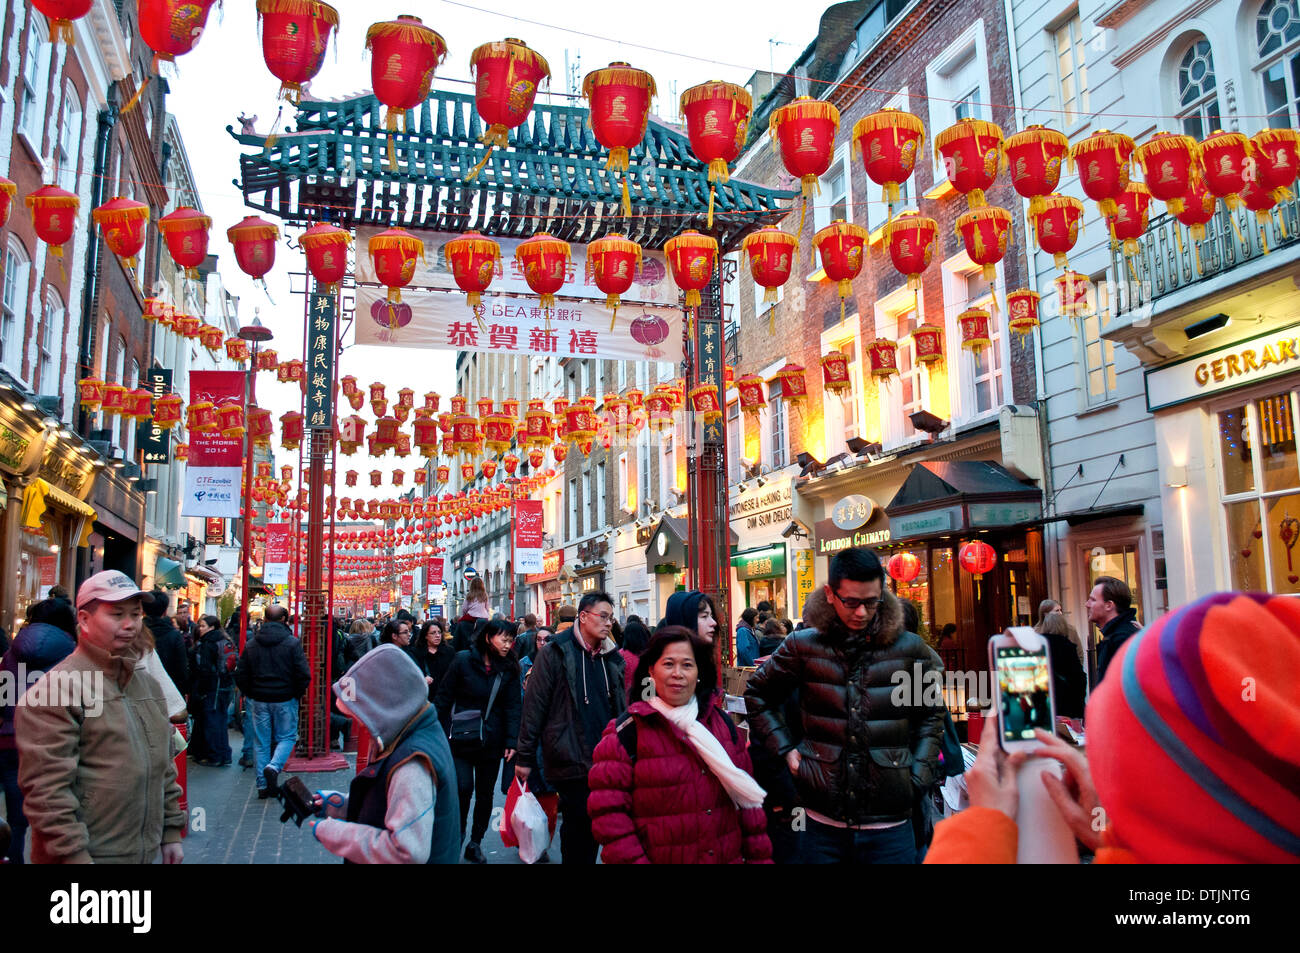 Chinese New Year decorations in Gerrard Street, Chinatown, Soho, London, WC2, UK Stock Photo